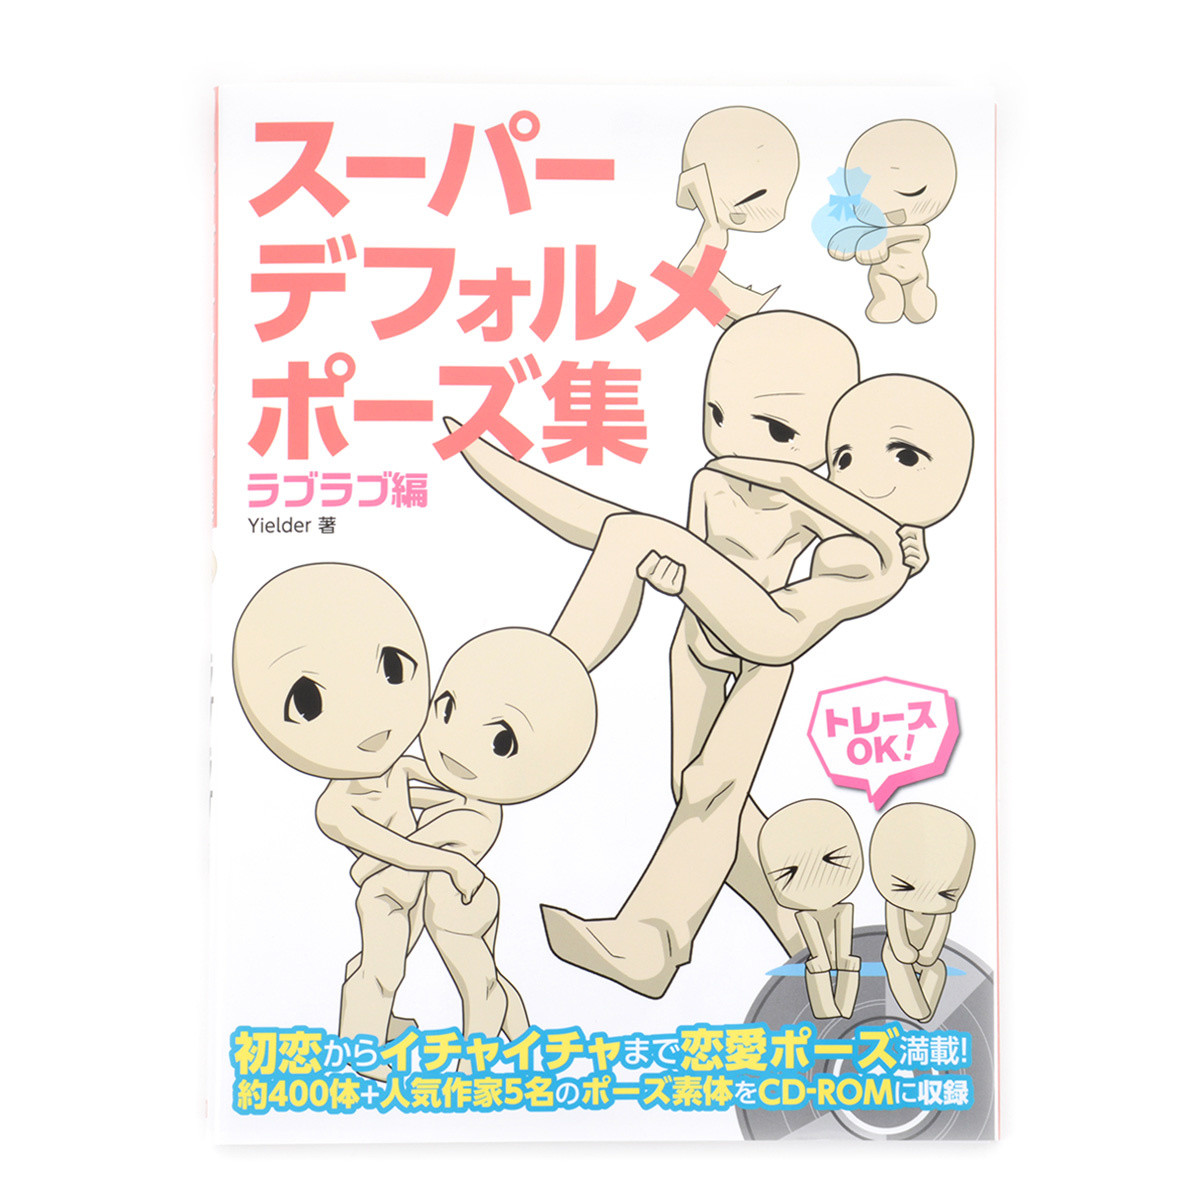 How to Draw Manga Super Deform Pose - Chibi Character ver. | J-List